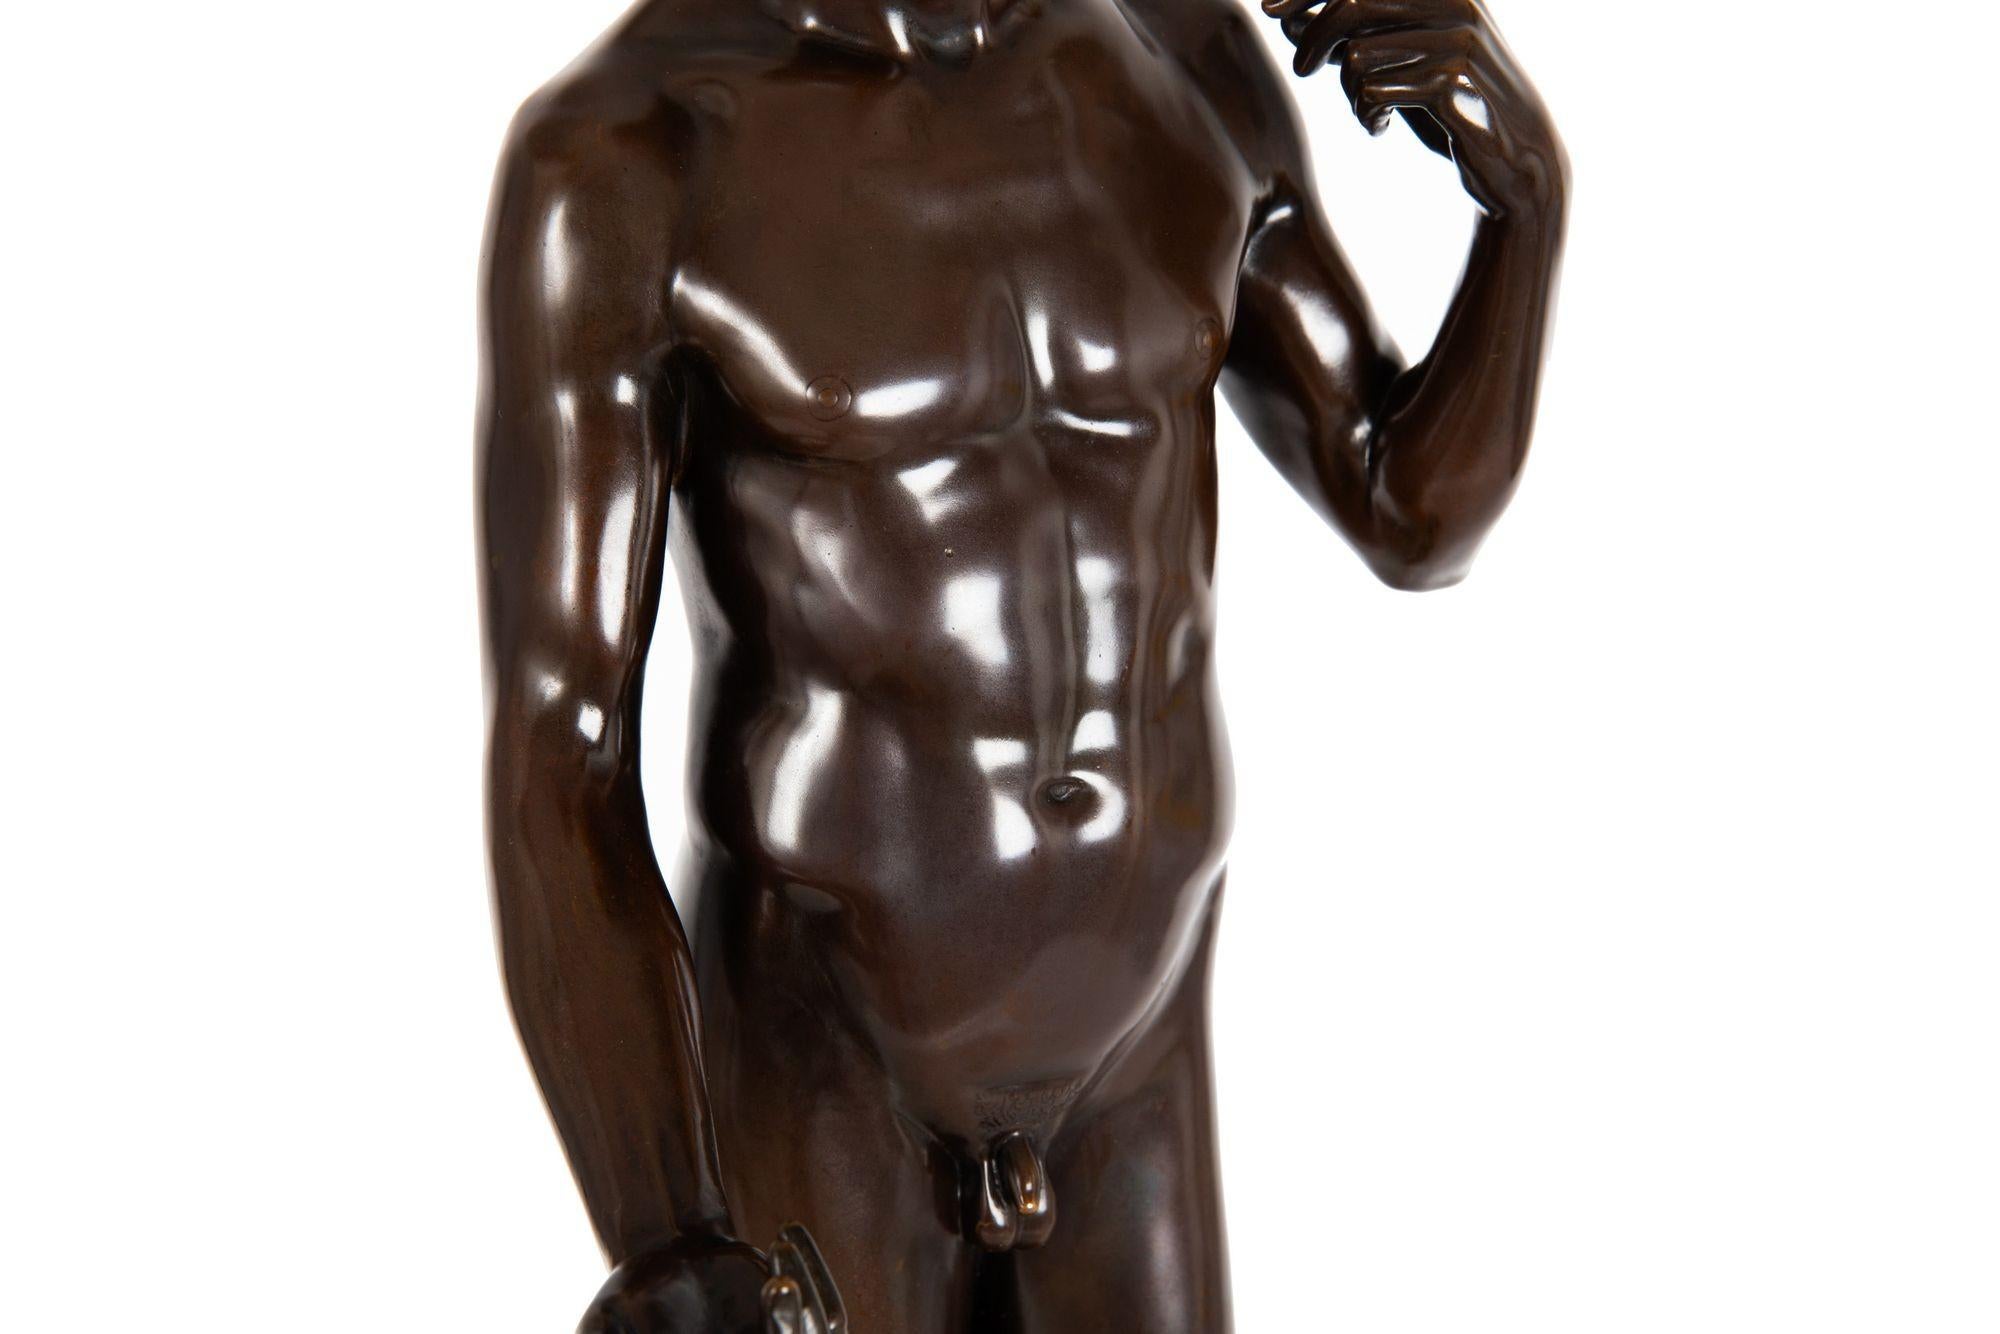 Rare Antique Bronze Sculpture of “Adam” (1911) by Charles Samuel 1